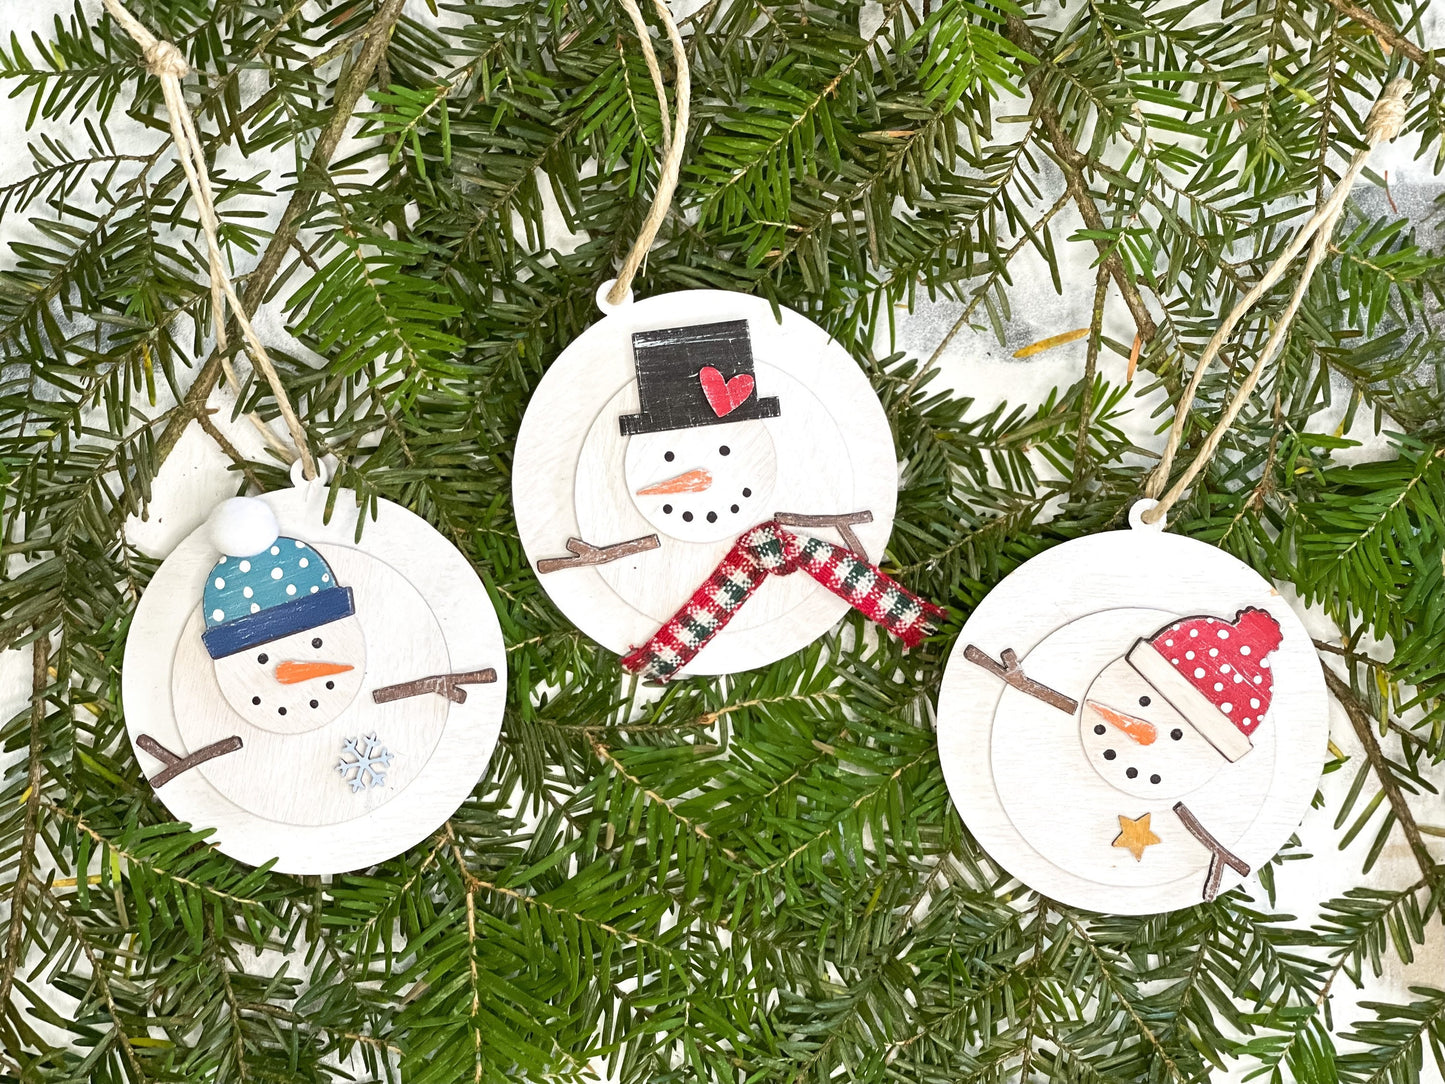 Snowman Christmas Ornament - Christmas Tree Decorations